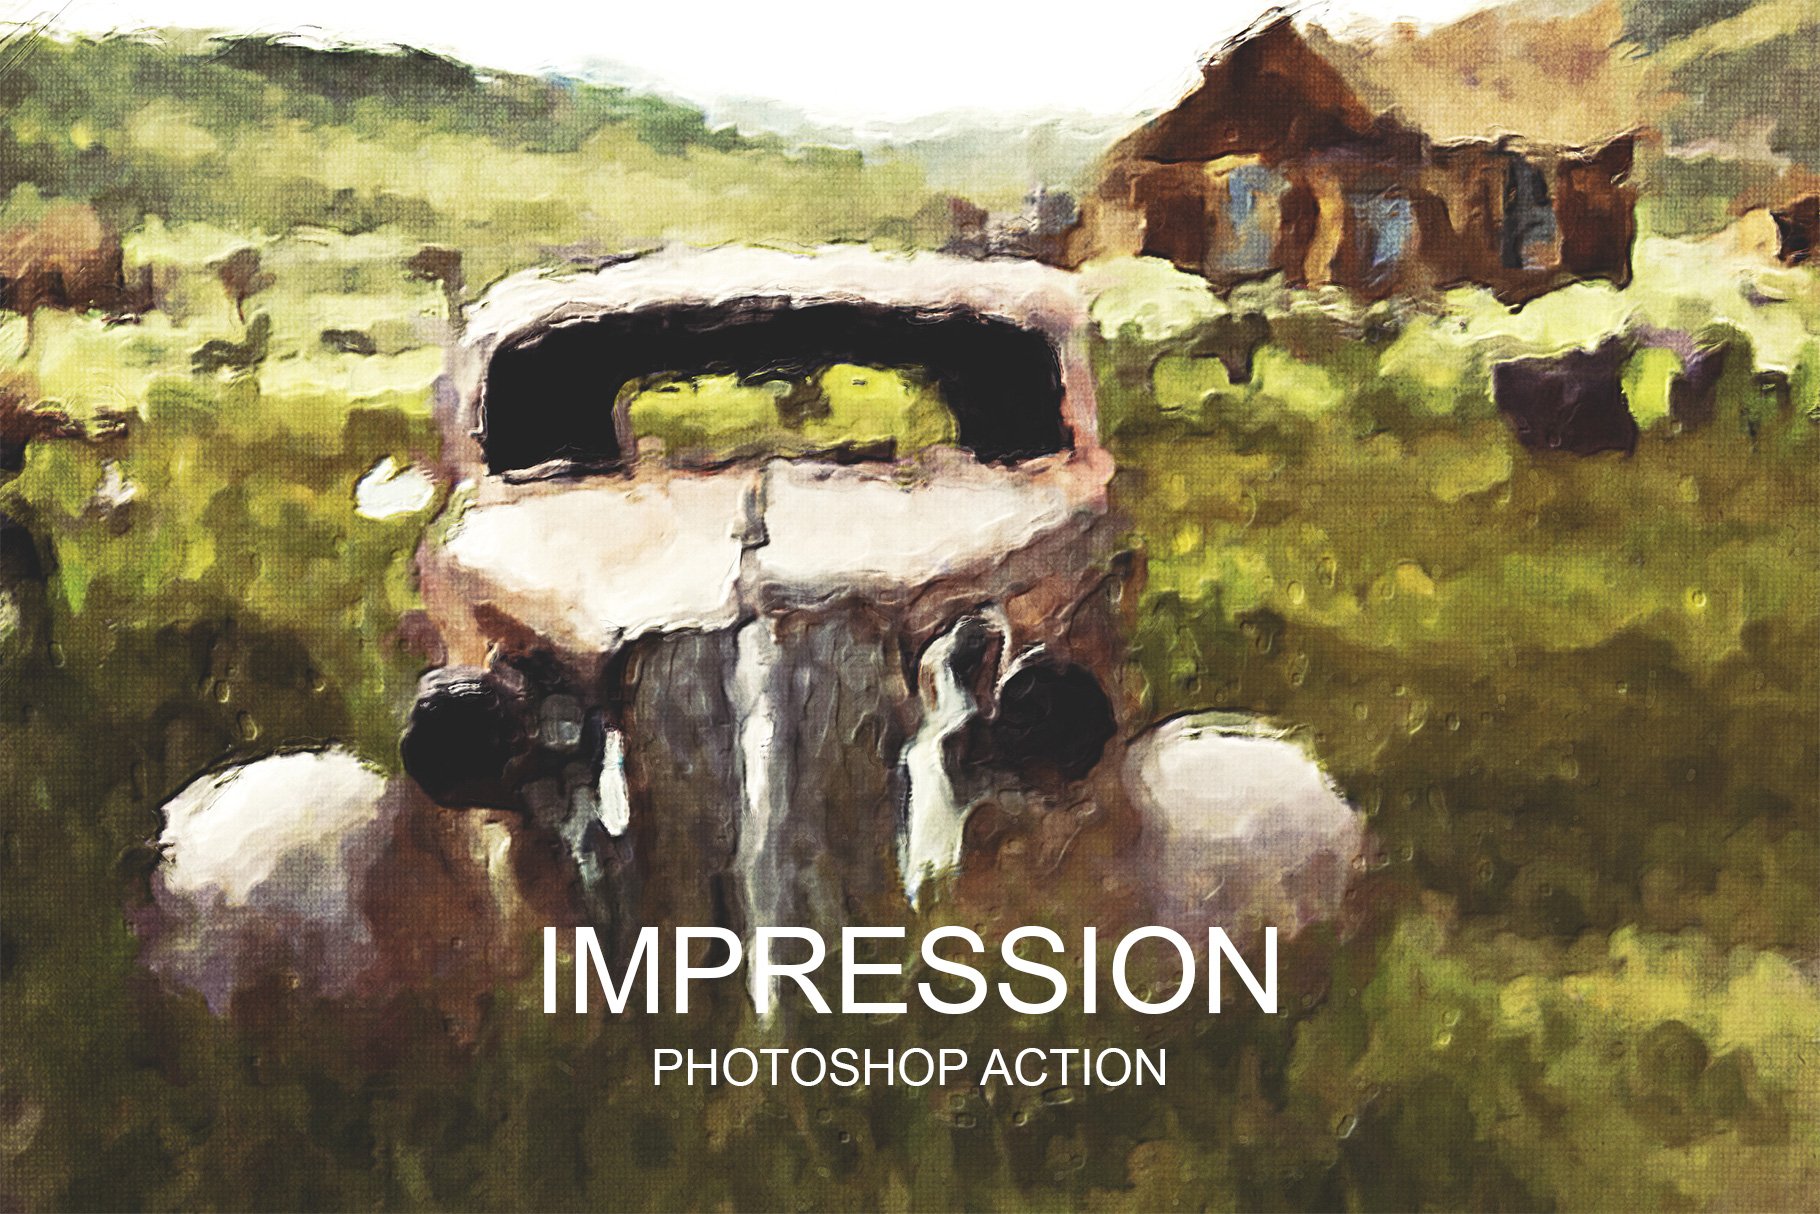 Impression - Photoshop Actioncover image.